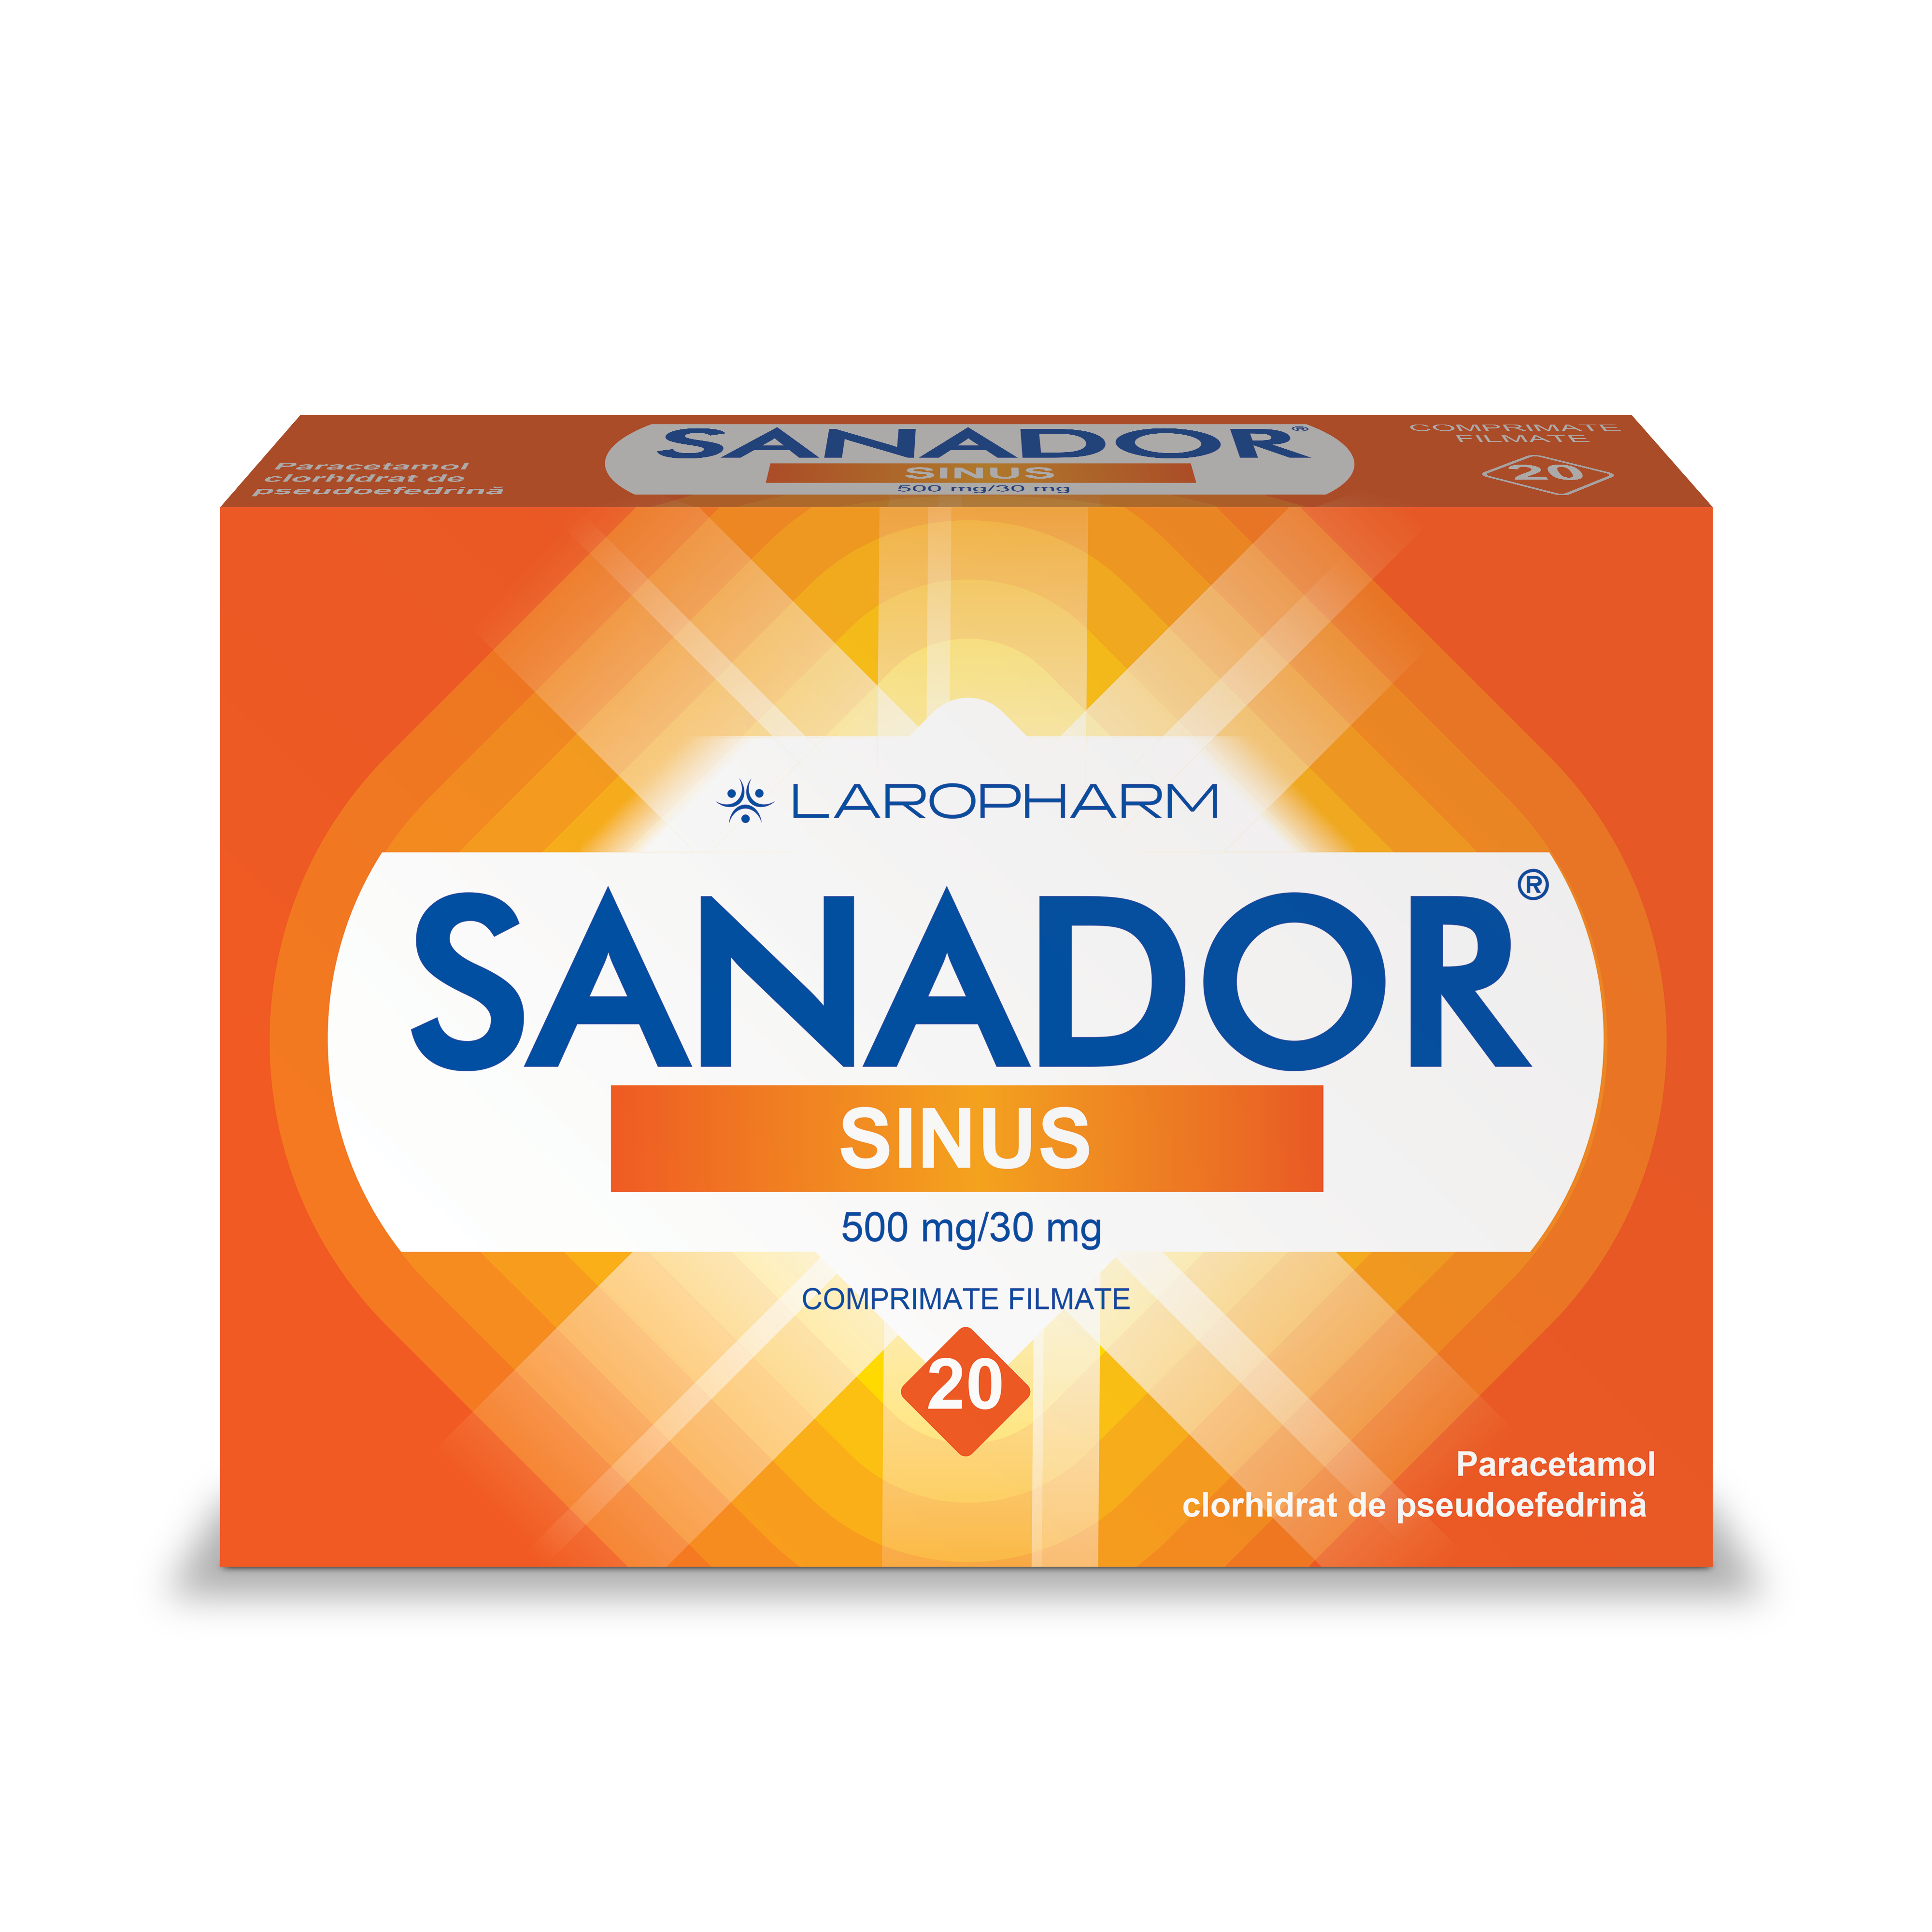 Sanador Sinus 500mg/30mg, 20 comprimate filmate, Laropharm